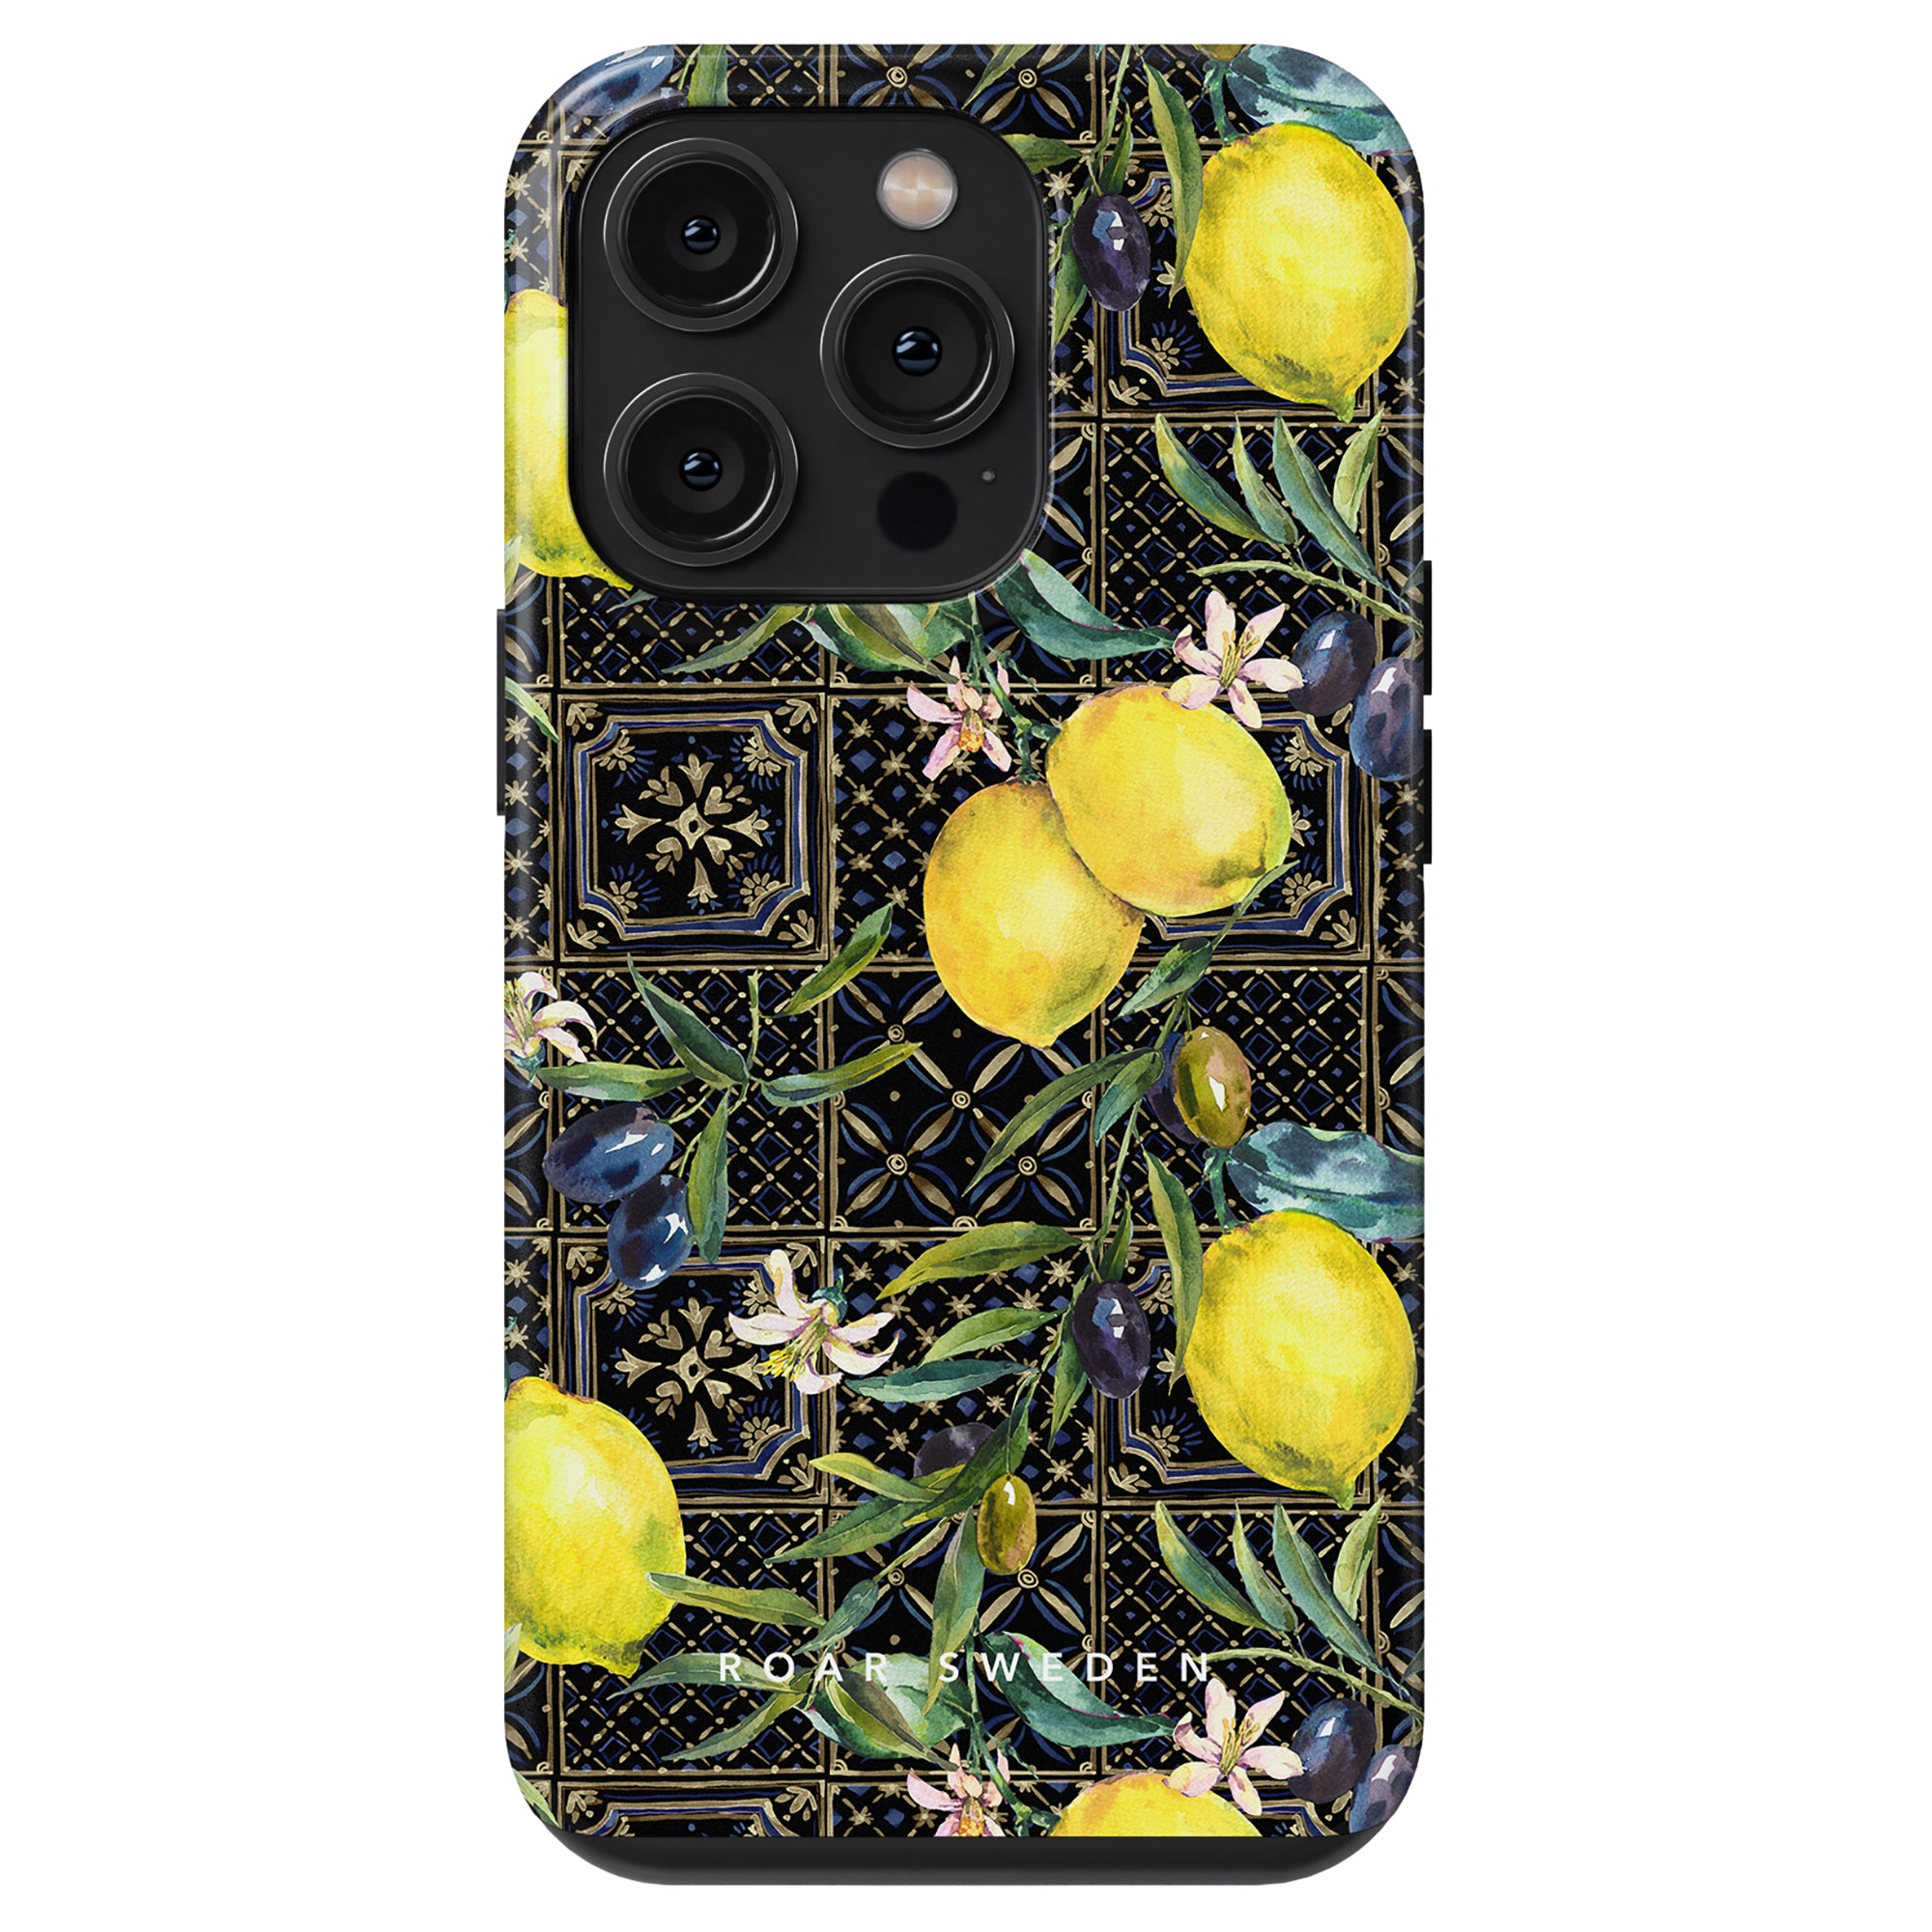 Sorrento - Tough Case with lemon and floral design.